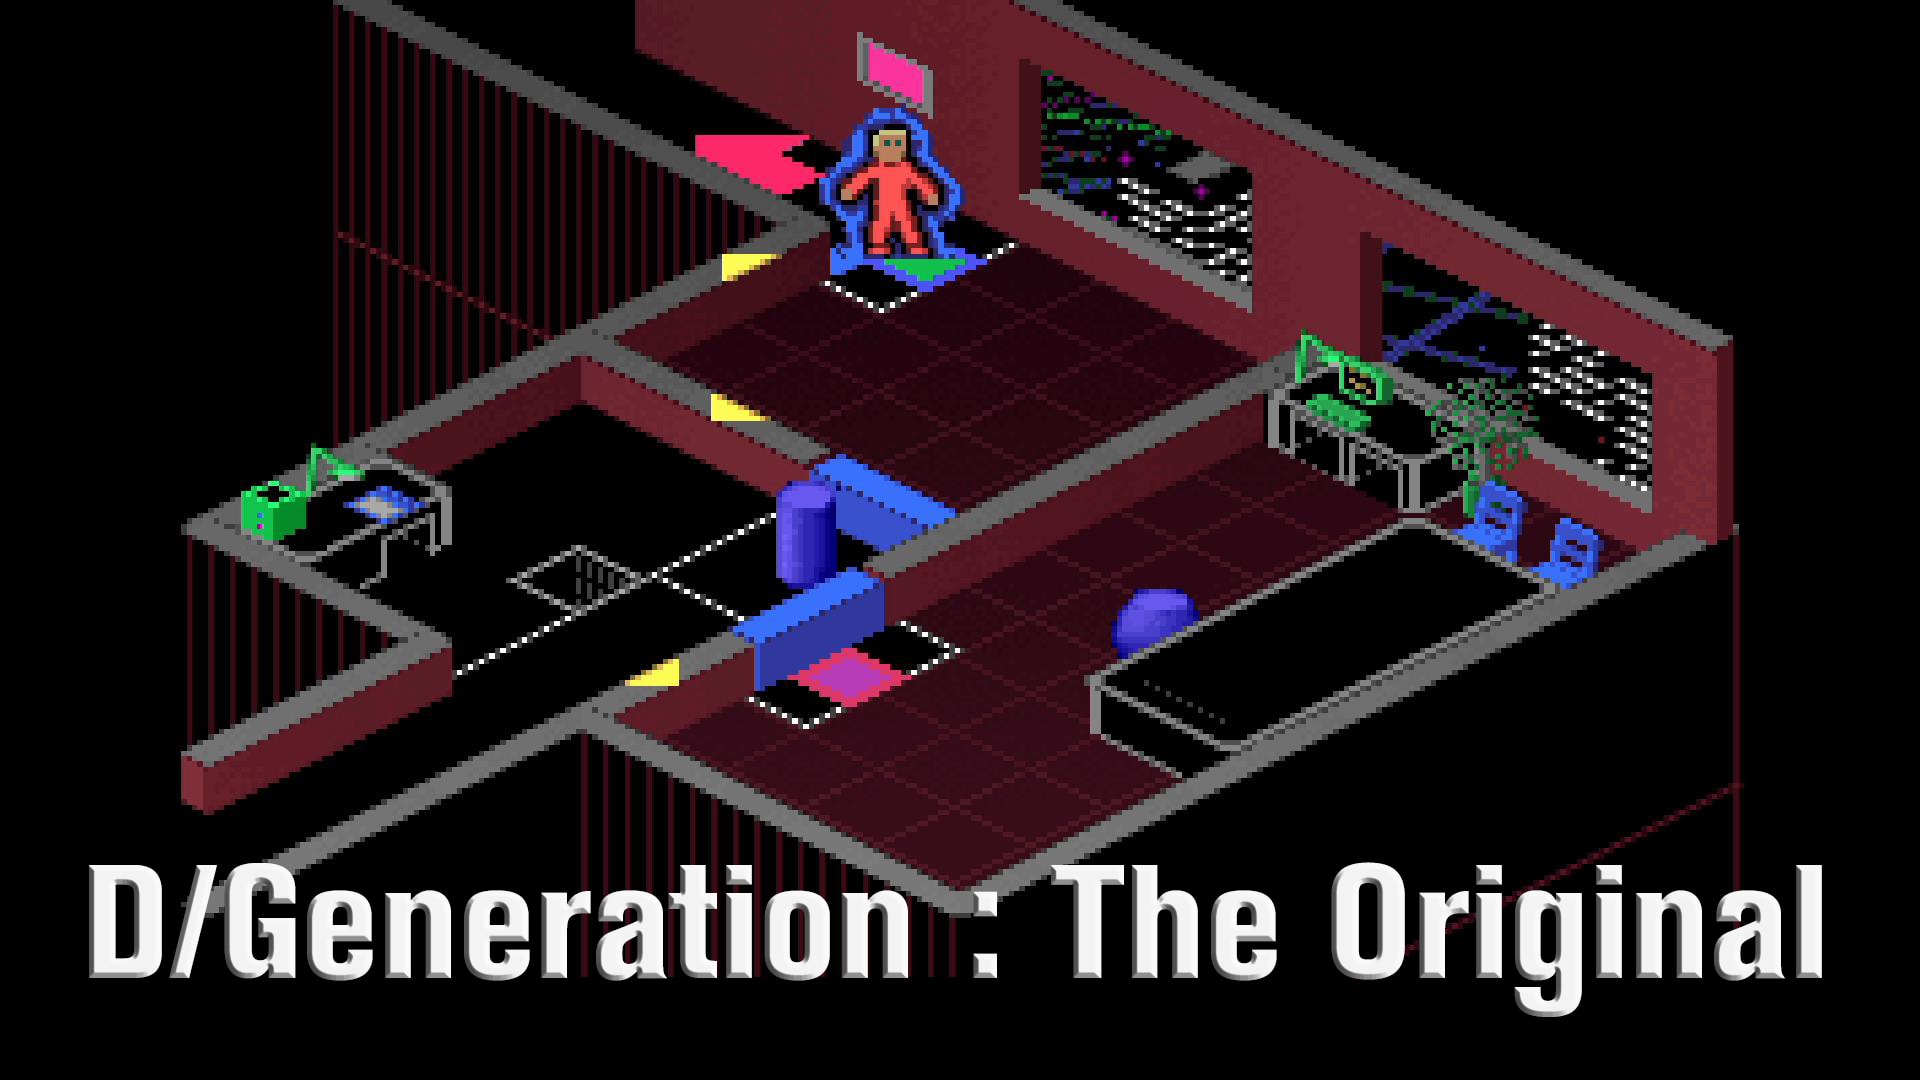 D/Generation : The Original